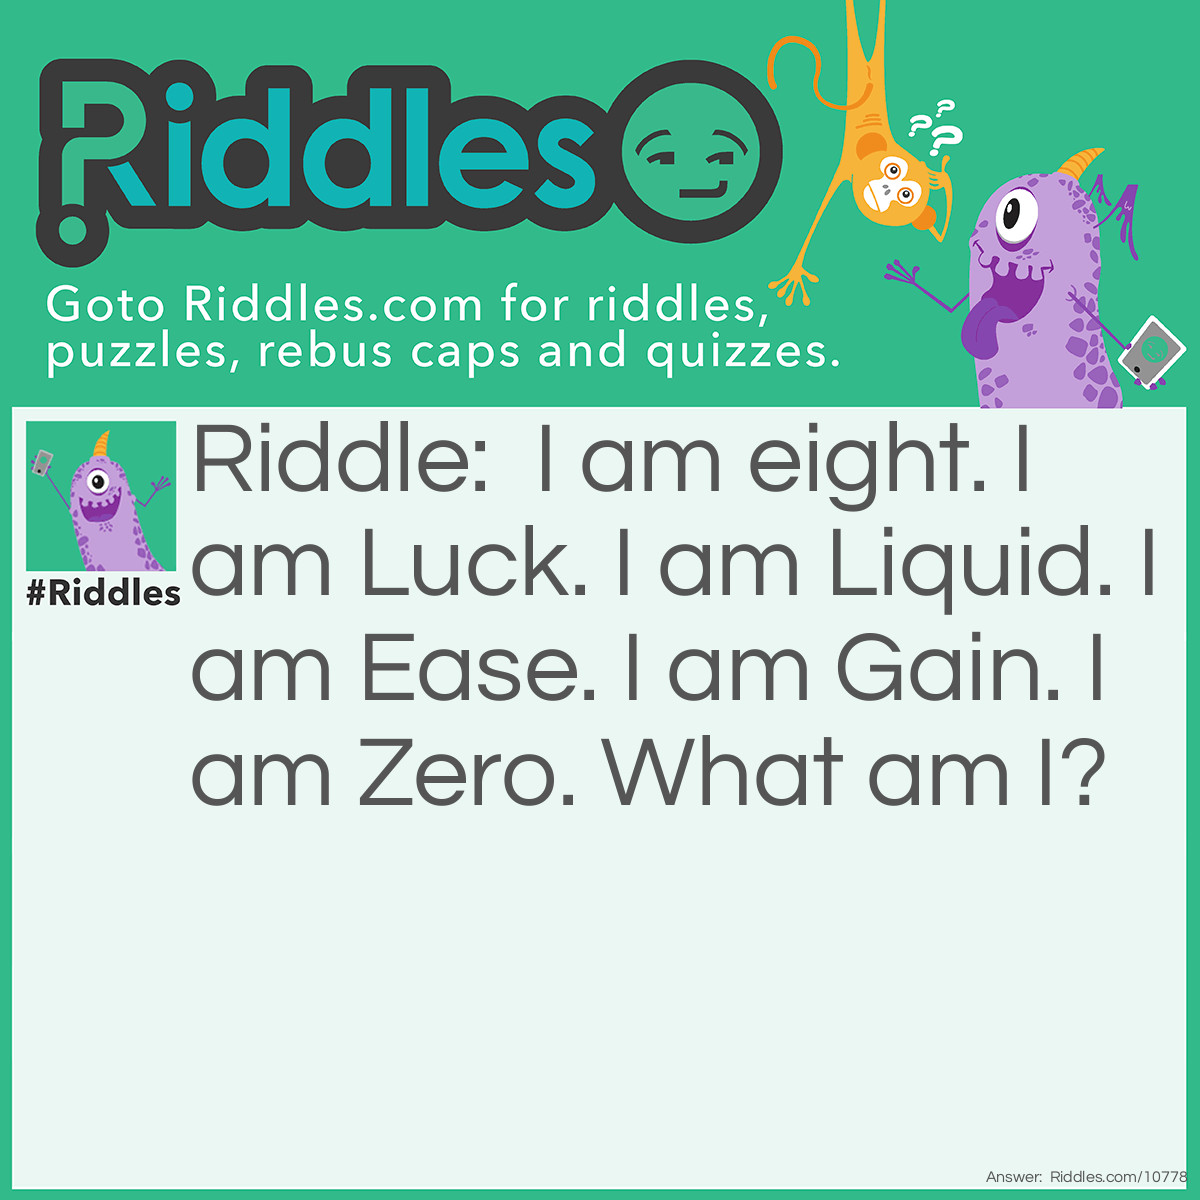 Riddle: I am eight. I am Luck. I am Liquid. I am Ease. I am Gain. I am Zero. What am I? Answer: Unanswered